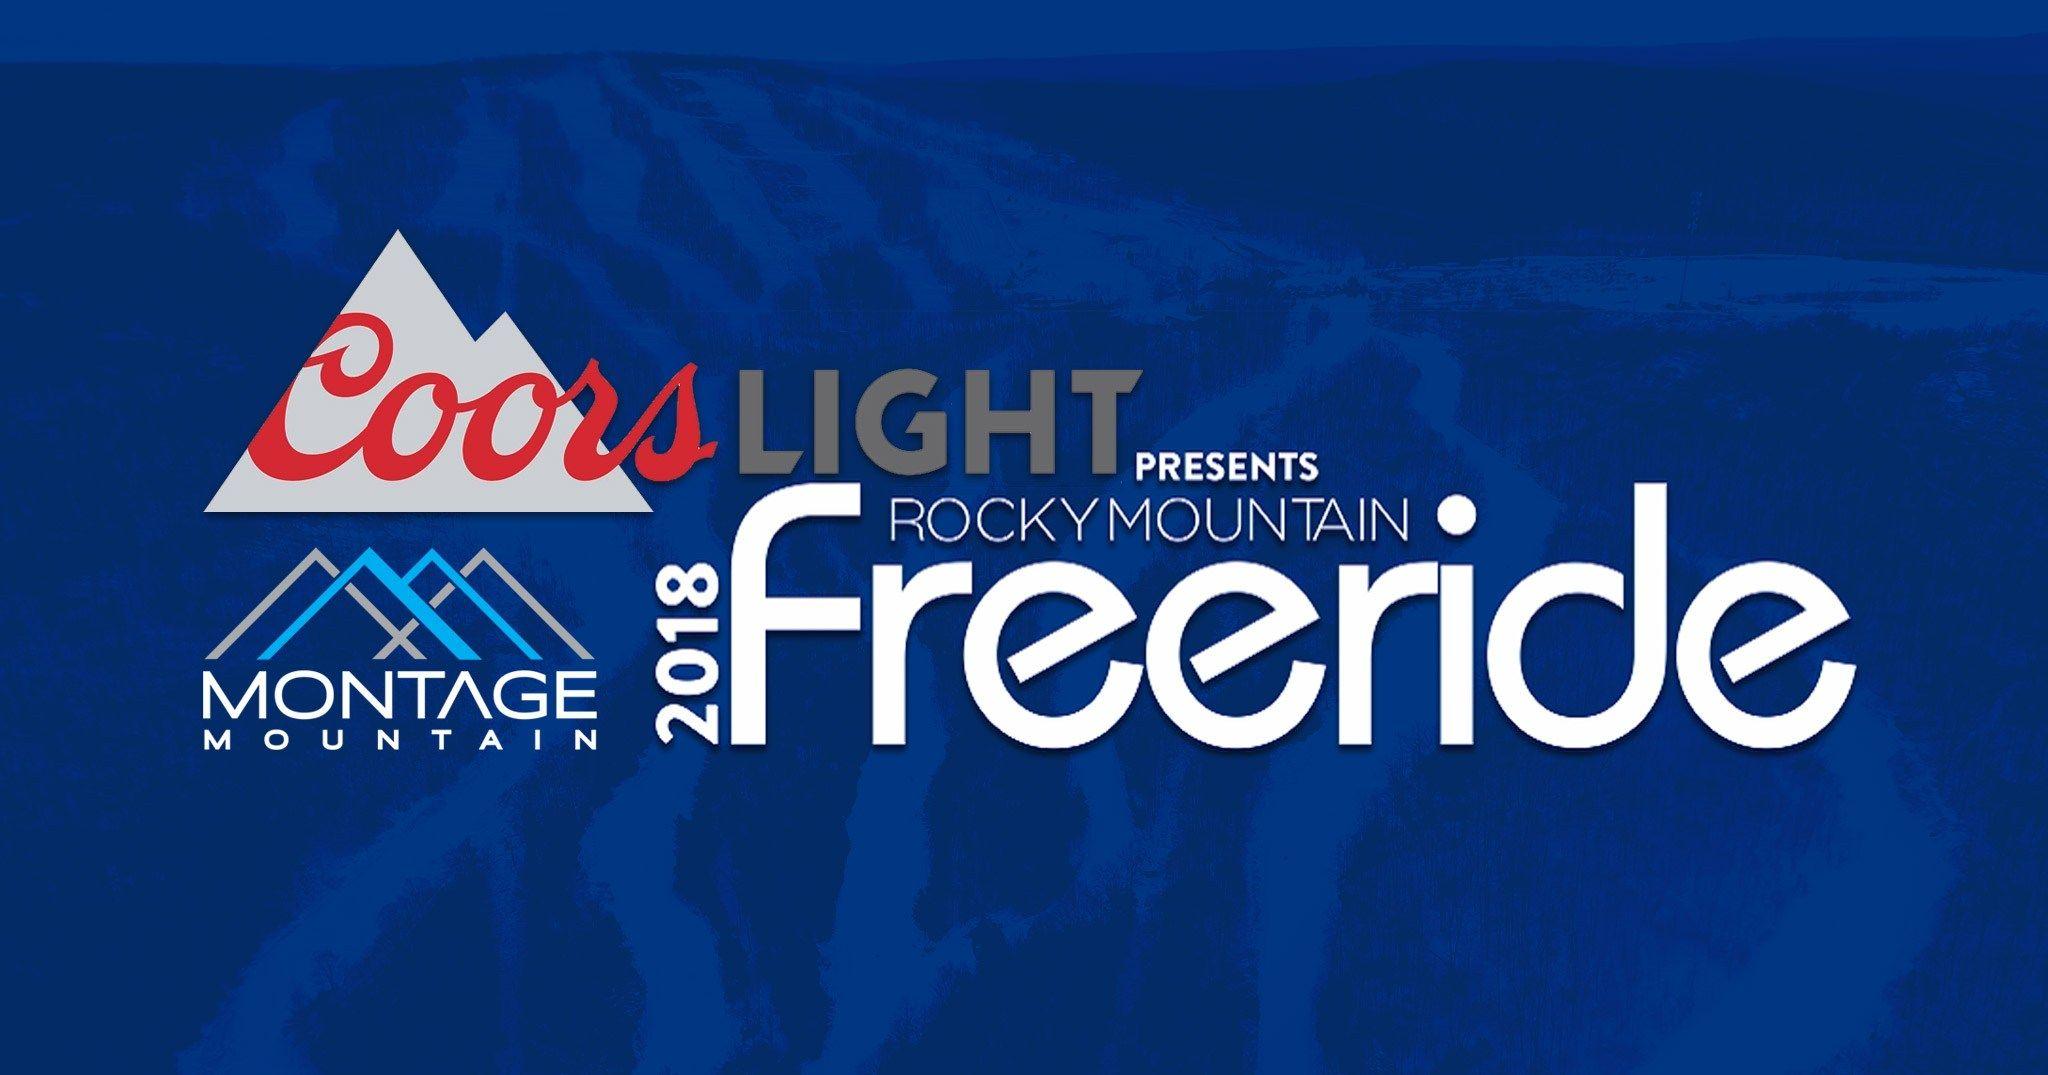 Blue Mountains Coors Light Logo - Coors Light Rocky Mtn FREE RIDE | PA Ski Resort | Skiing ...